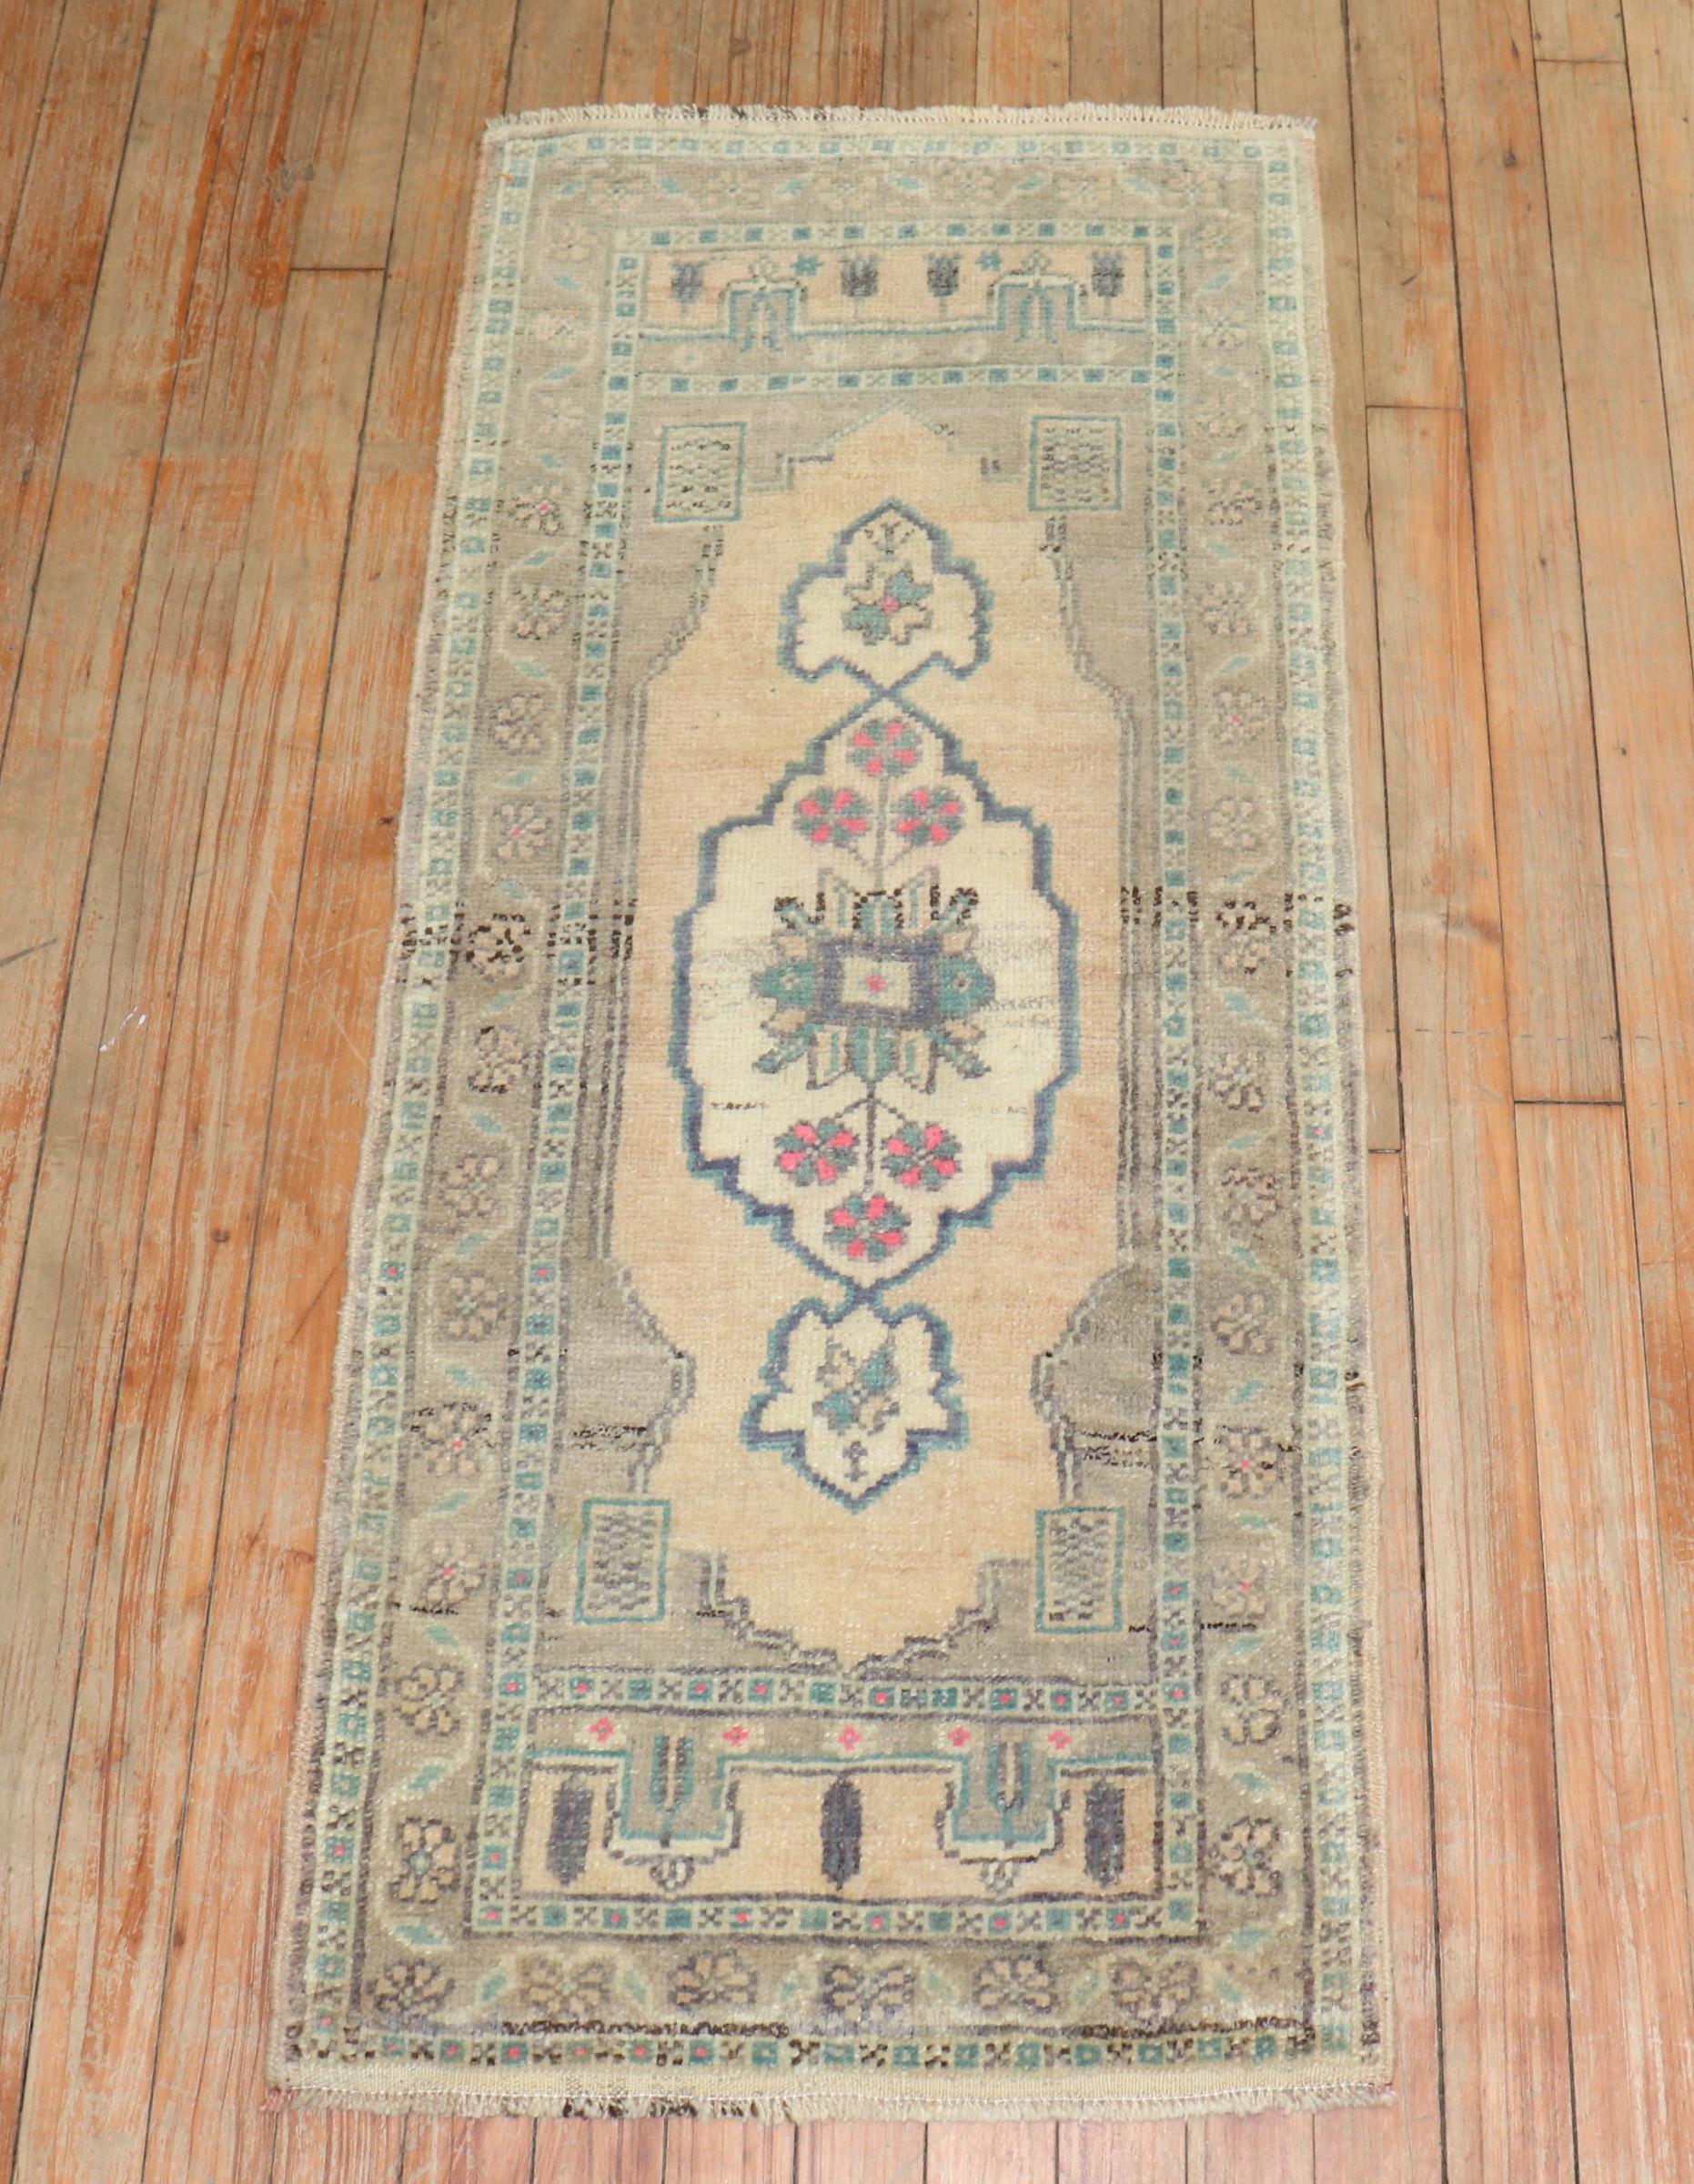 MId 20th century one of a kind handmade Turkish yastik rug

Measures: 1'8'' x 3'10''.